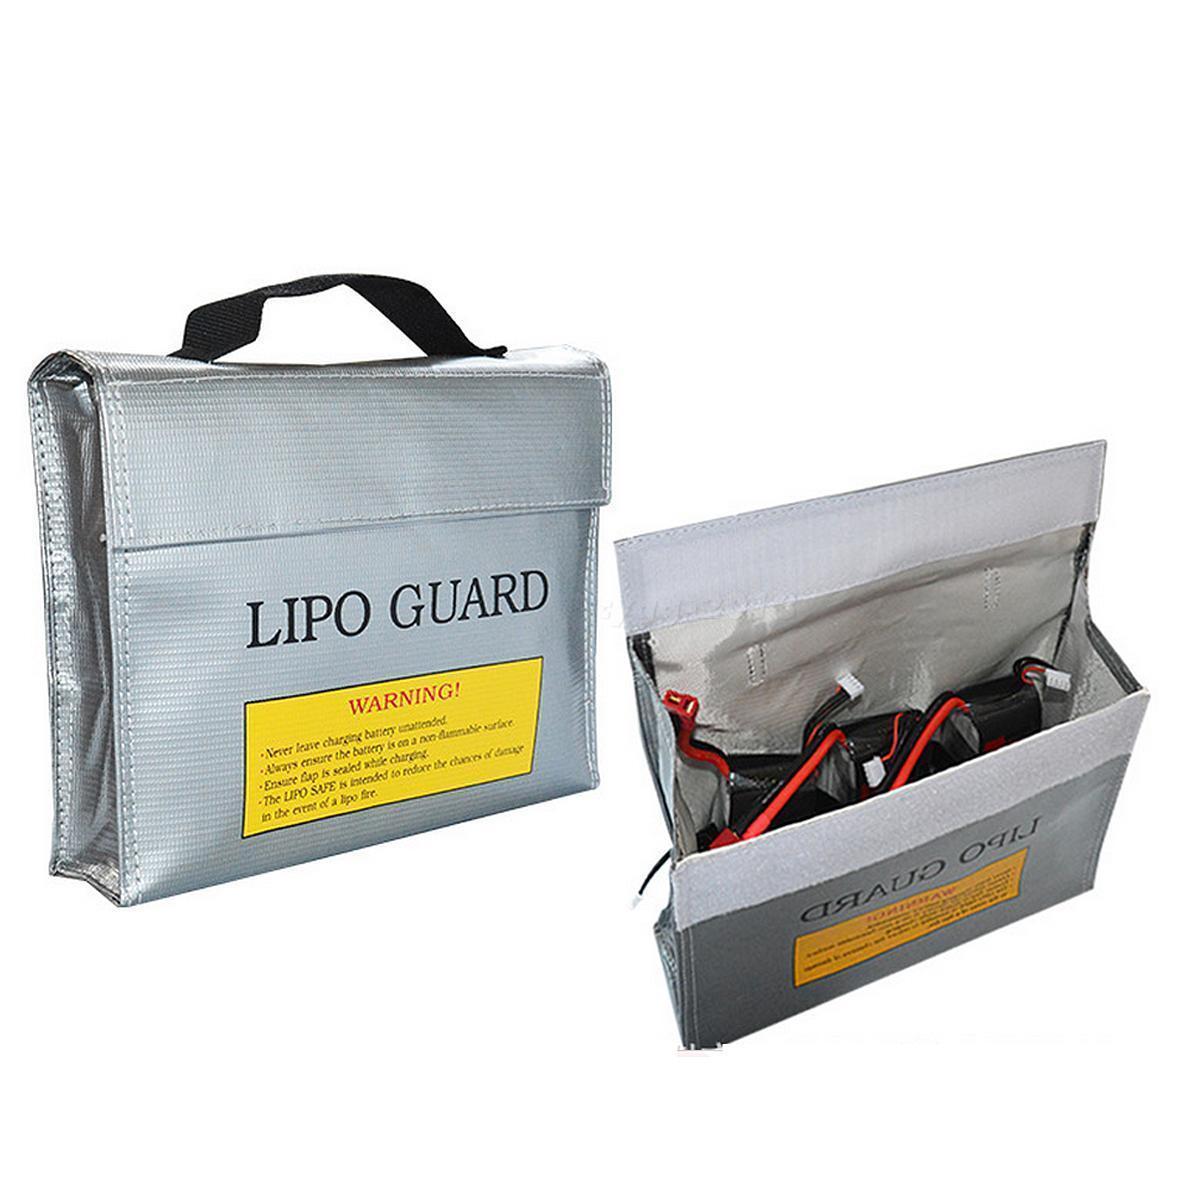 Fireproof Explosionproof Lipo Guard Protection Pouch Sack for DJI Mavic Pro Phantom 3 Phantom 4 RC Lipo Battery Safe Bag for Charging and Storage 150x90x55mm, 2pcs Silver 